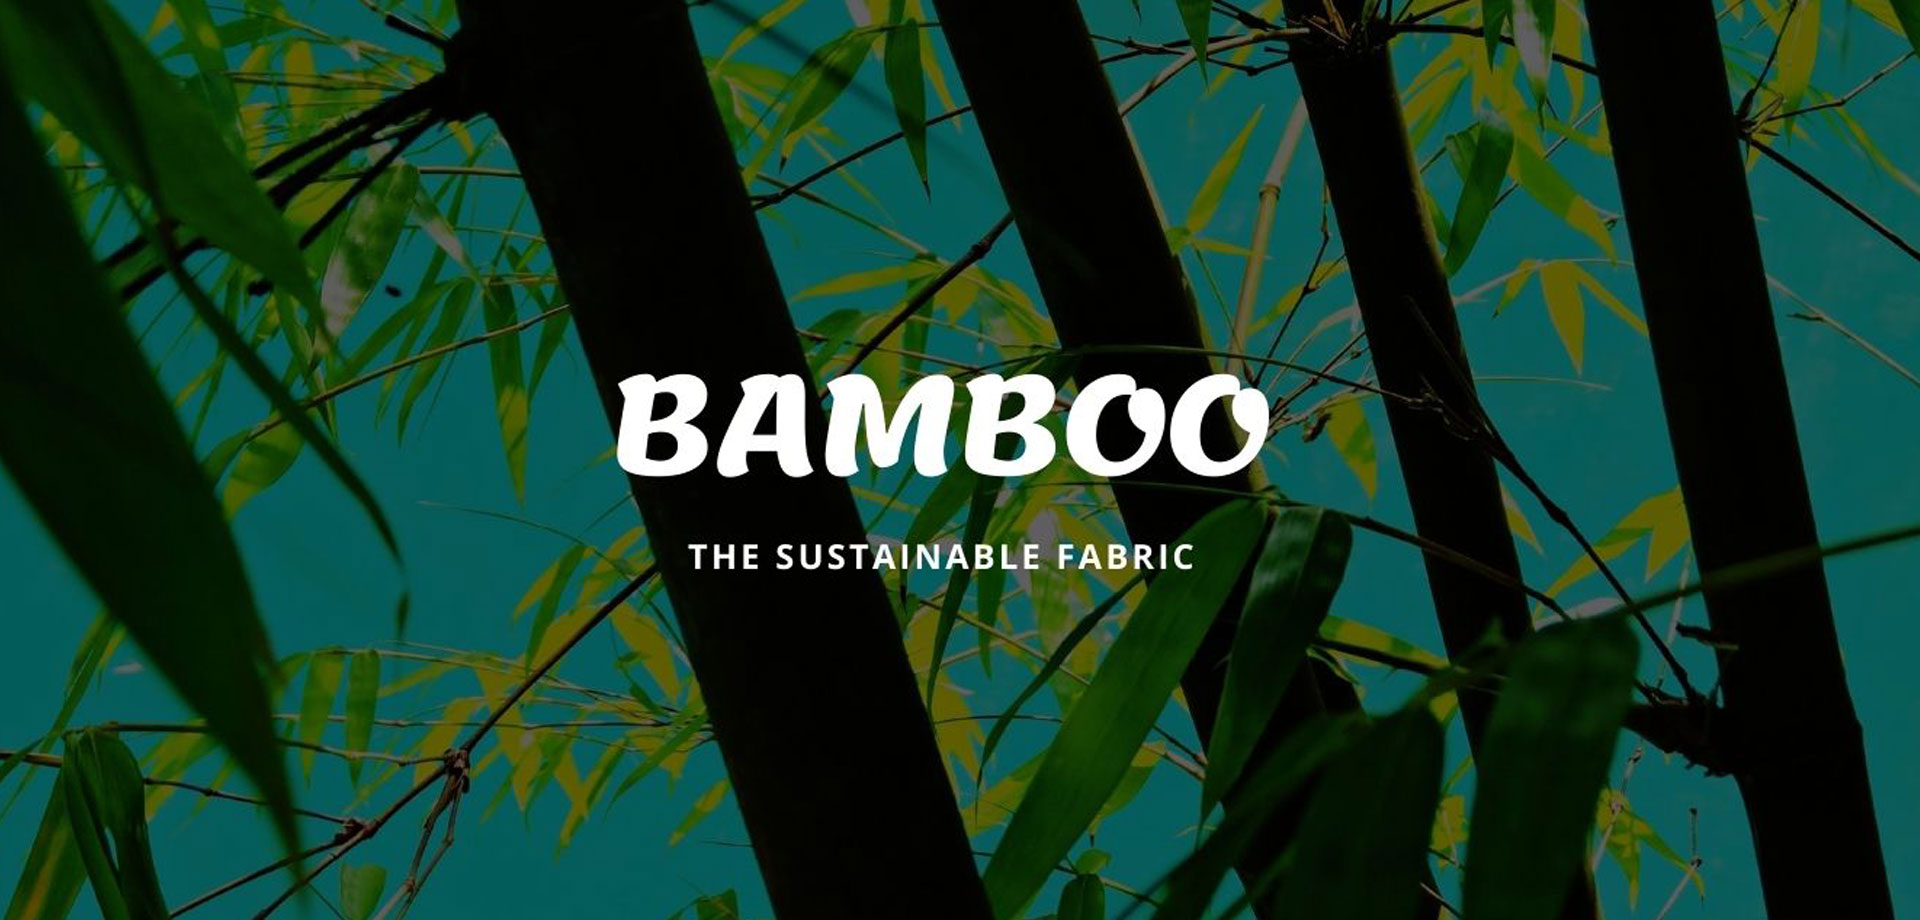 Bamboo Clothing Manufacturer